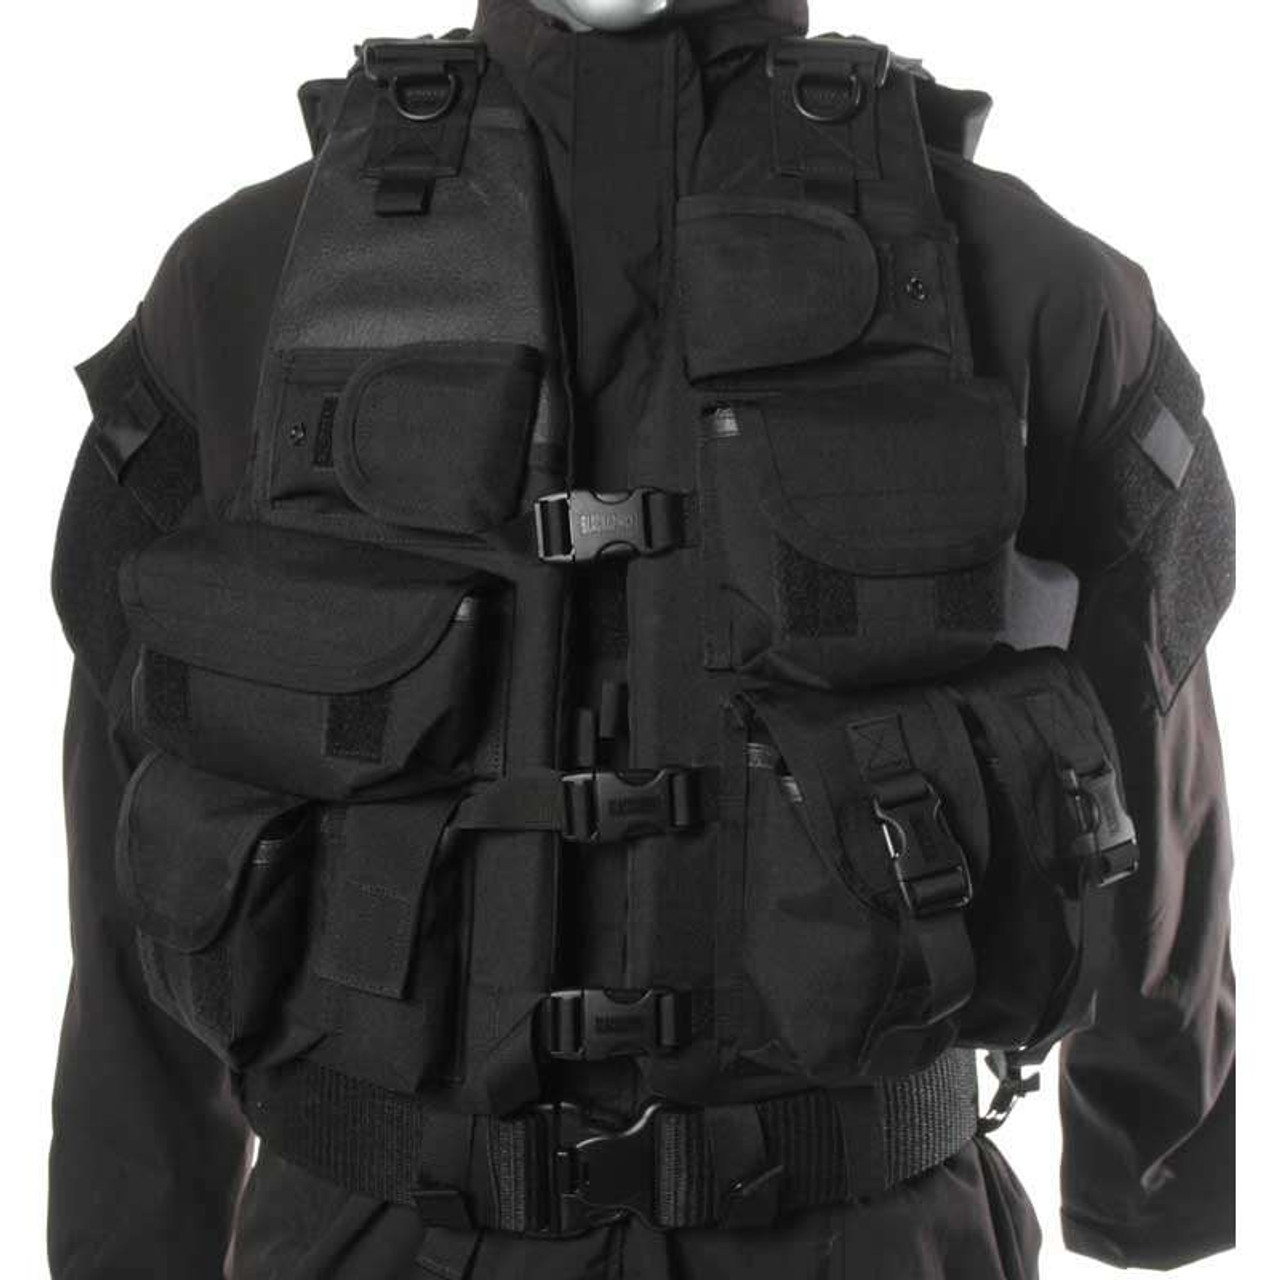 Blackhawk Omega Elite Tactical EOD Vests, FREE Shipping & NO Sales Tax